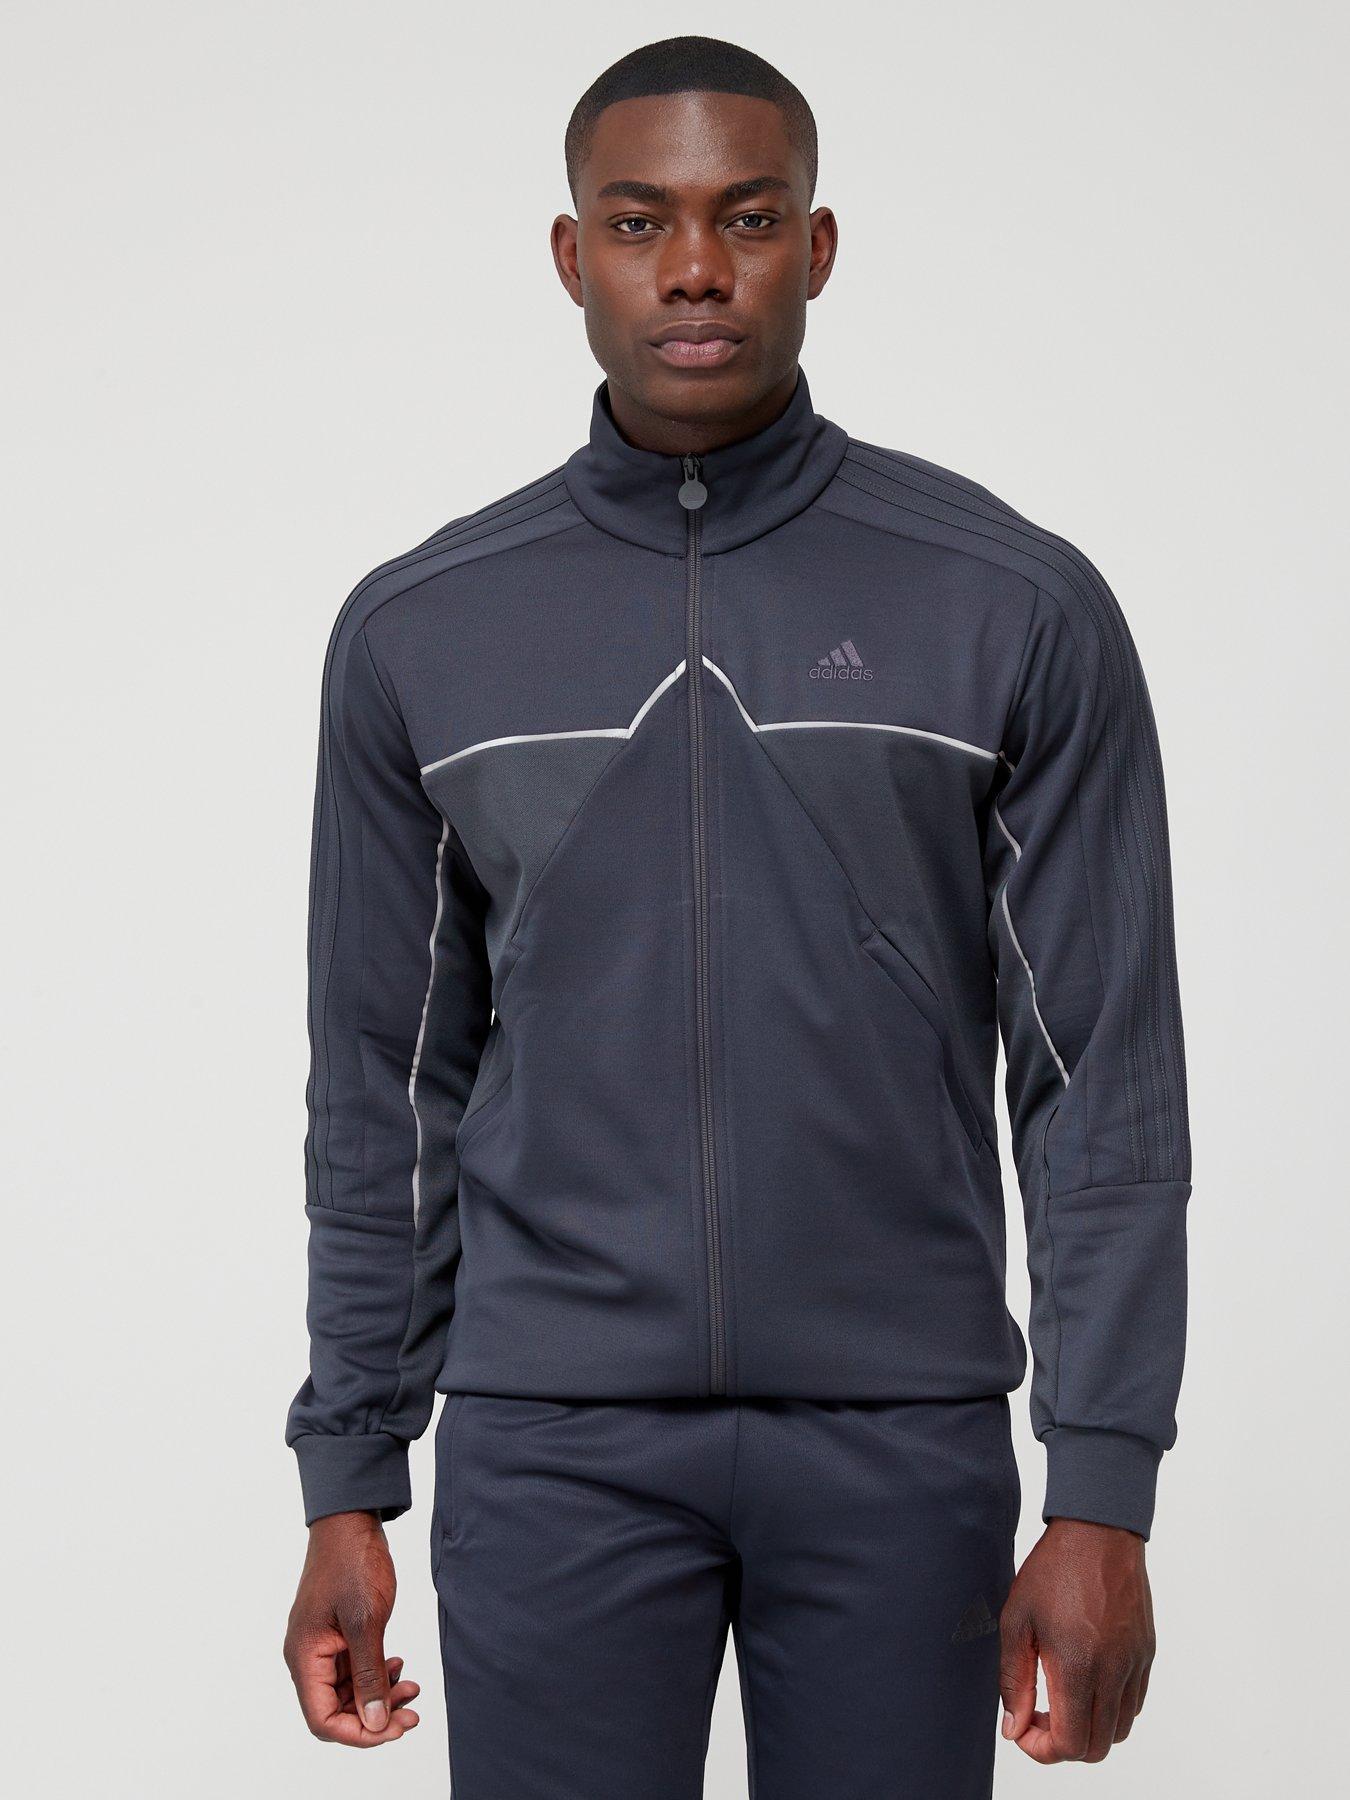 UNDER ARMOUR Men's Running Storm Hooded Jacket - Black/Grey